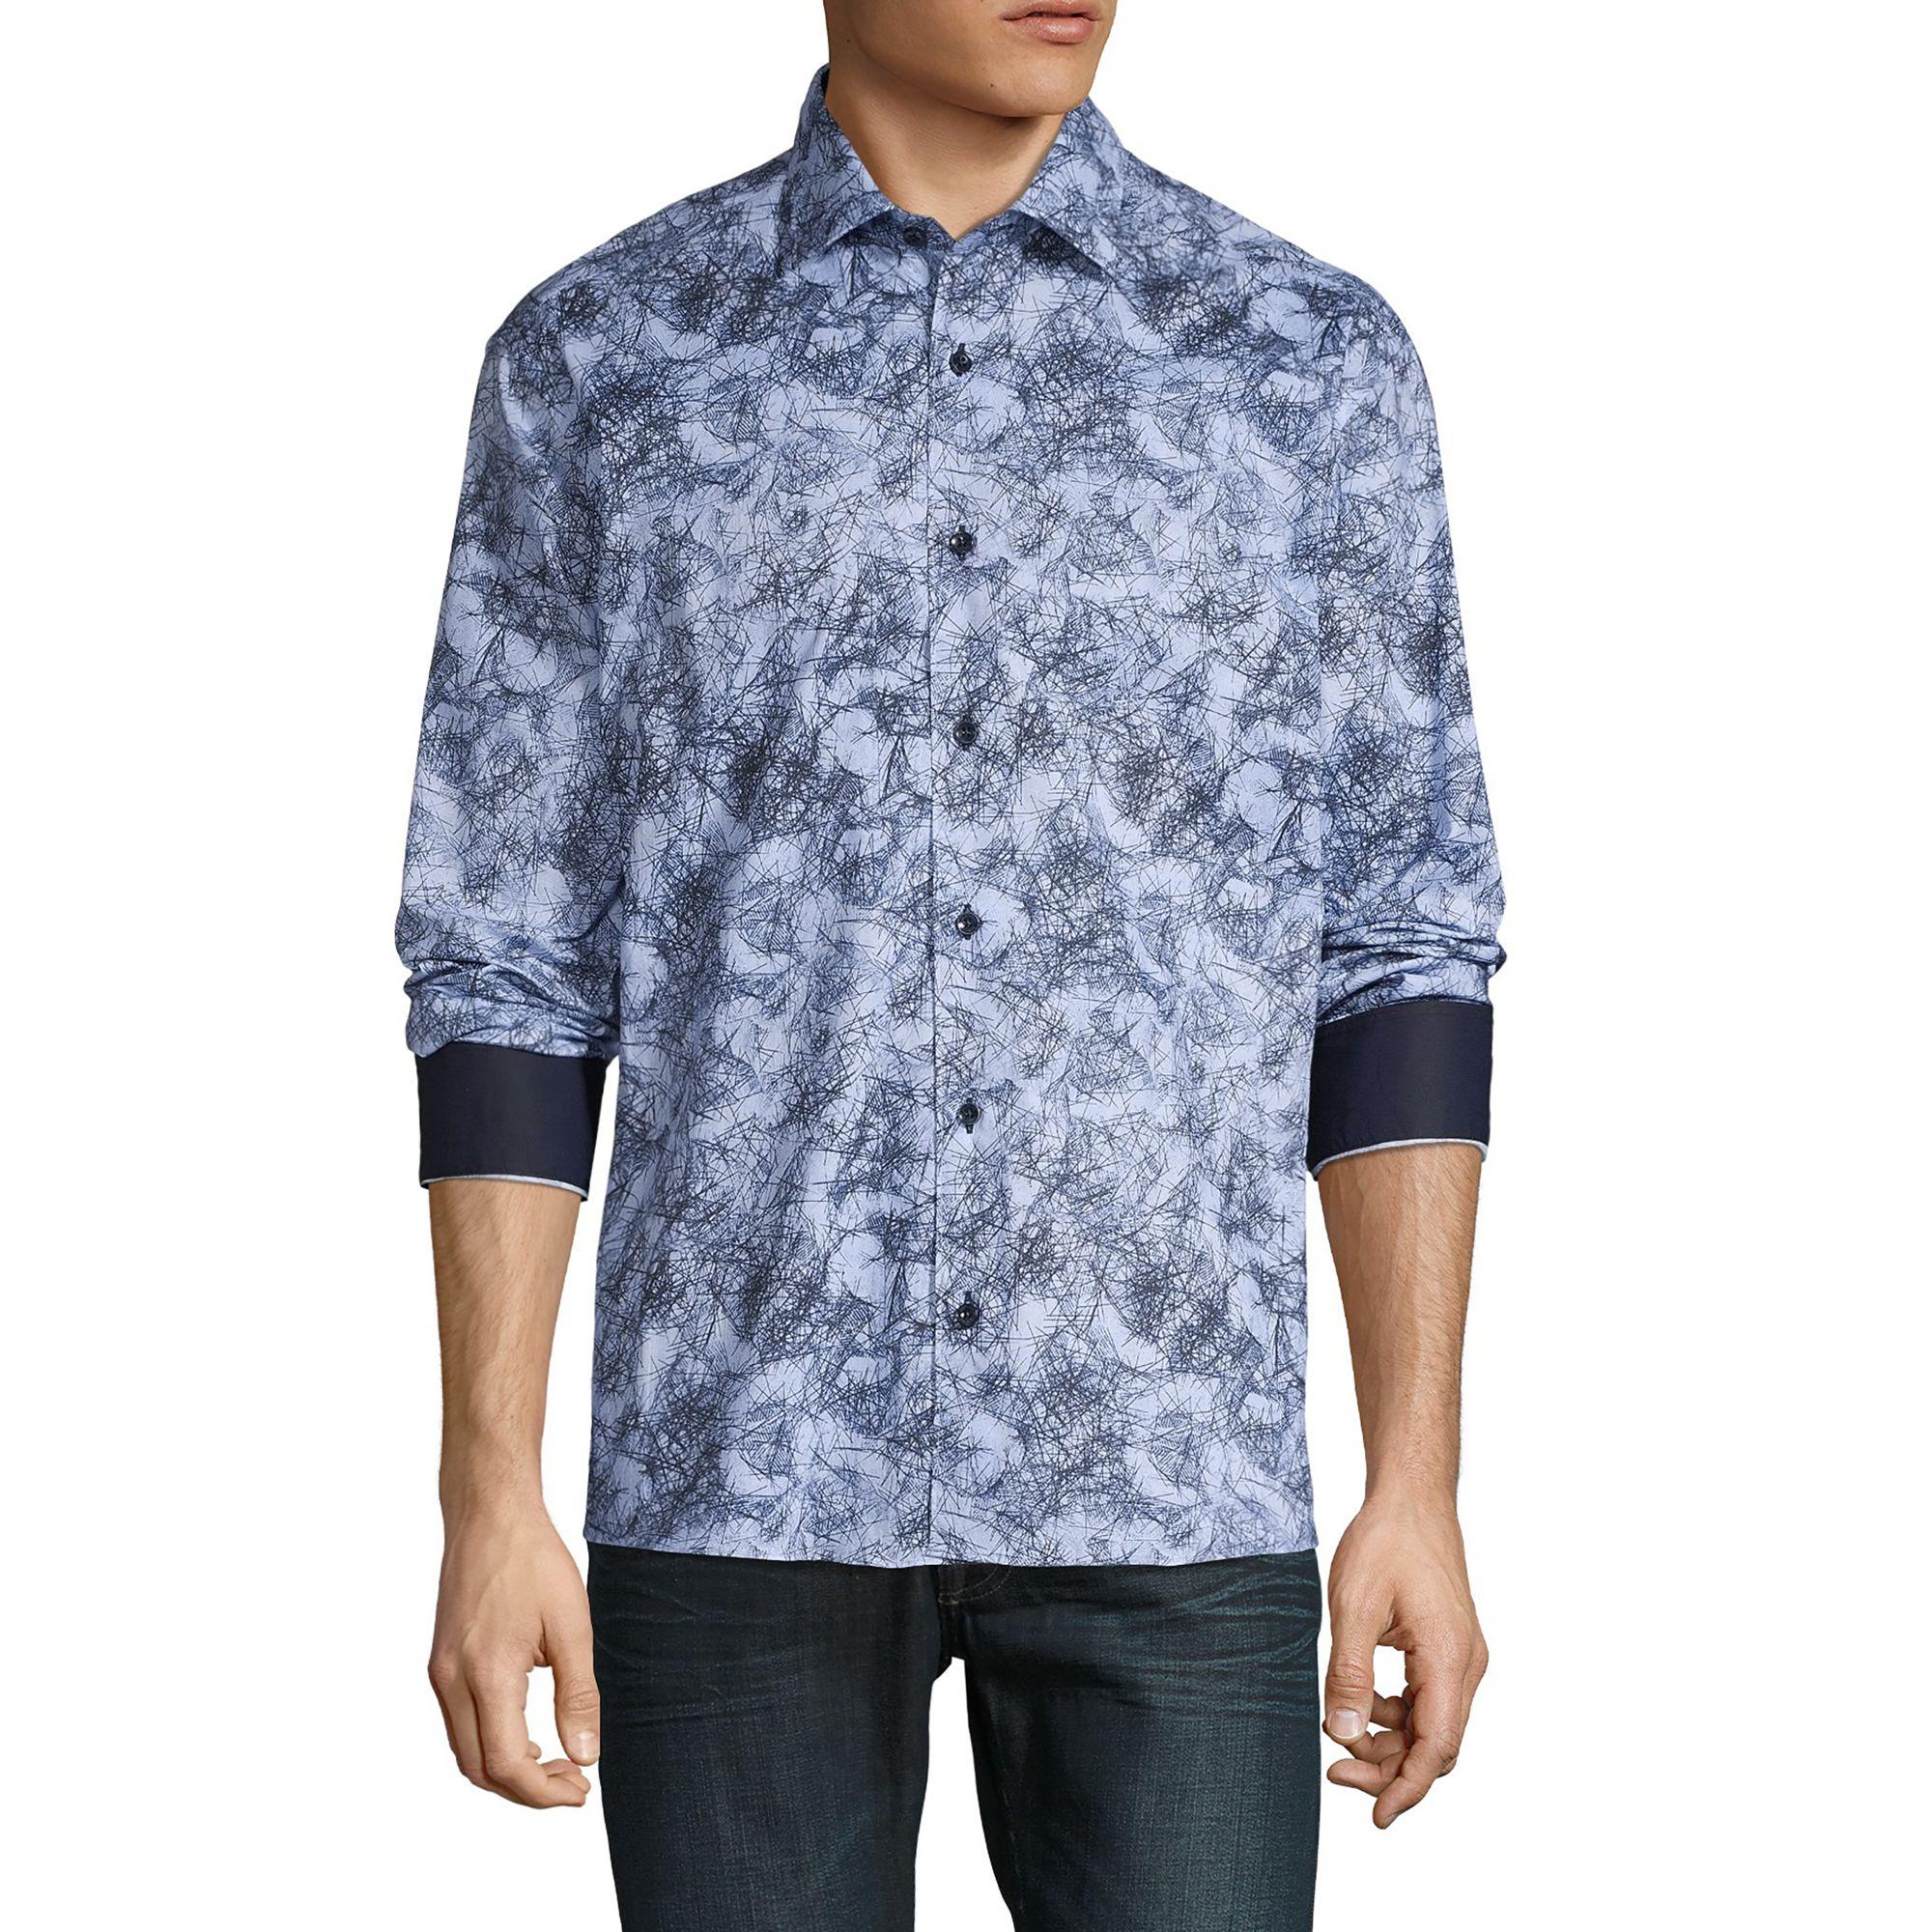 Bertigo Cotton Long-sleeve Poplin Shirt in Blue for Men - Lyst